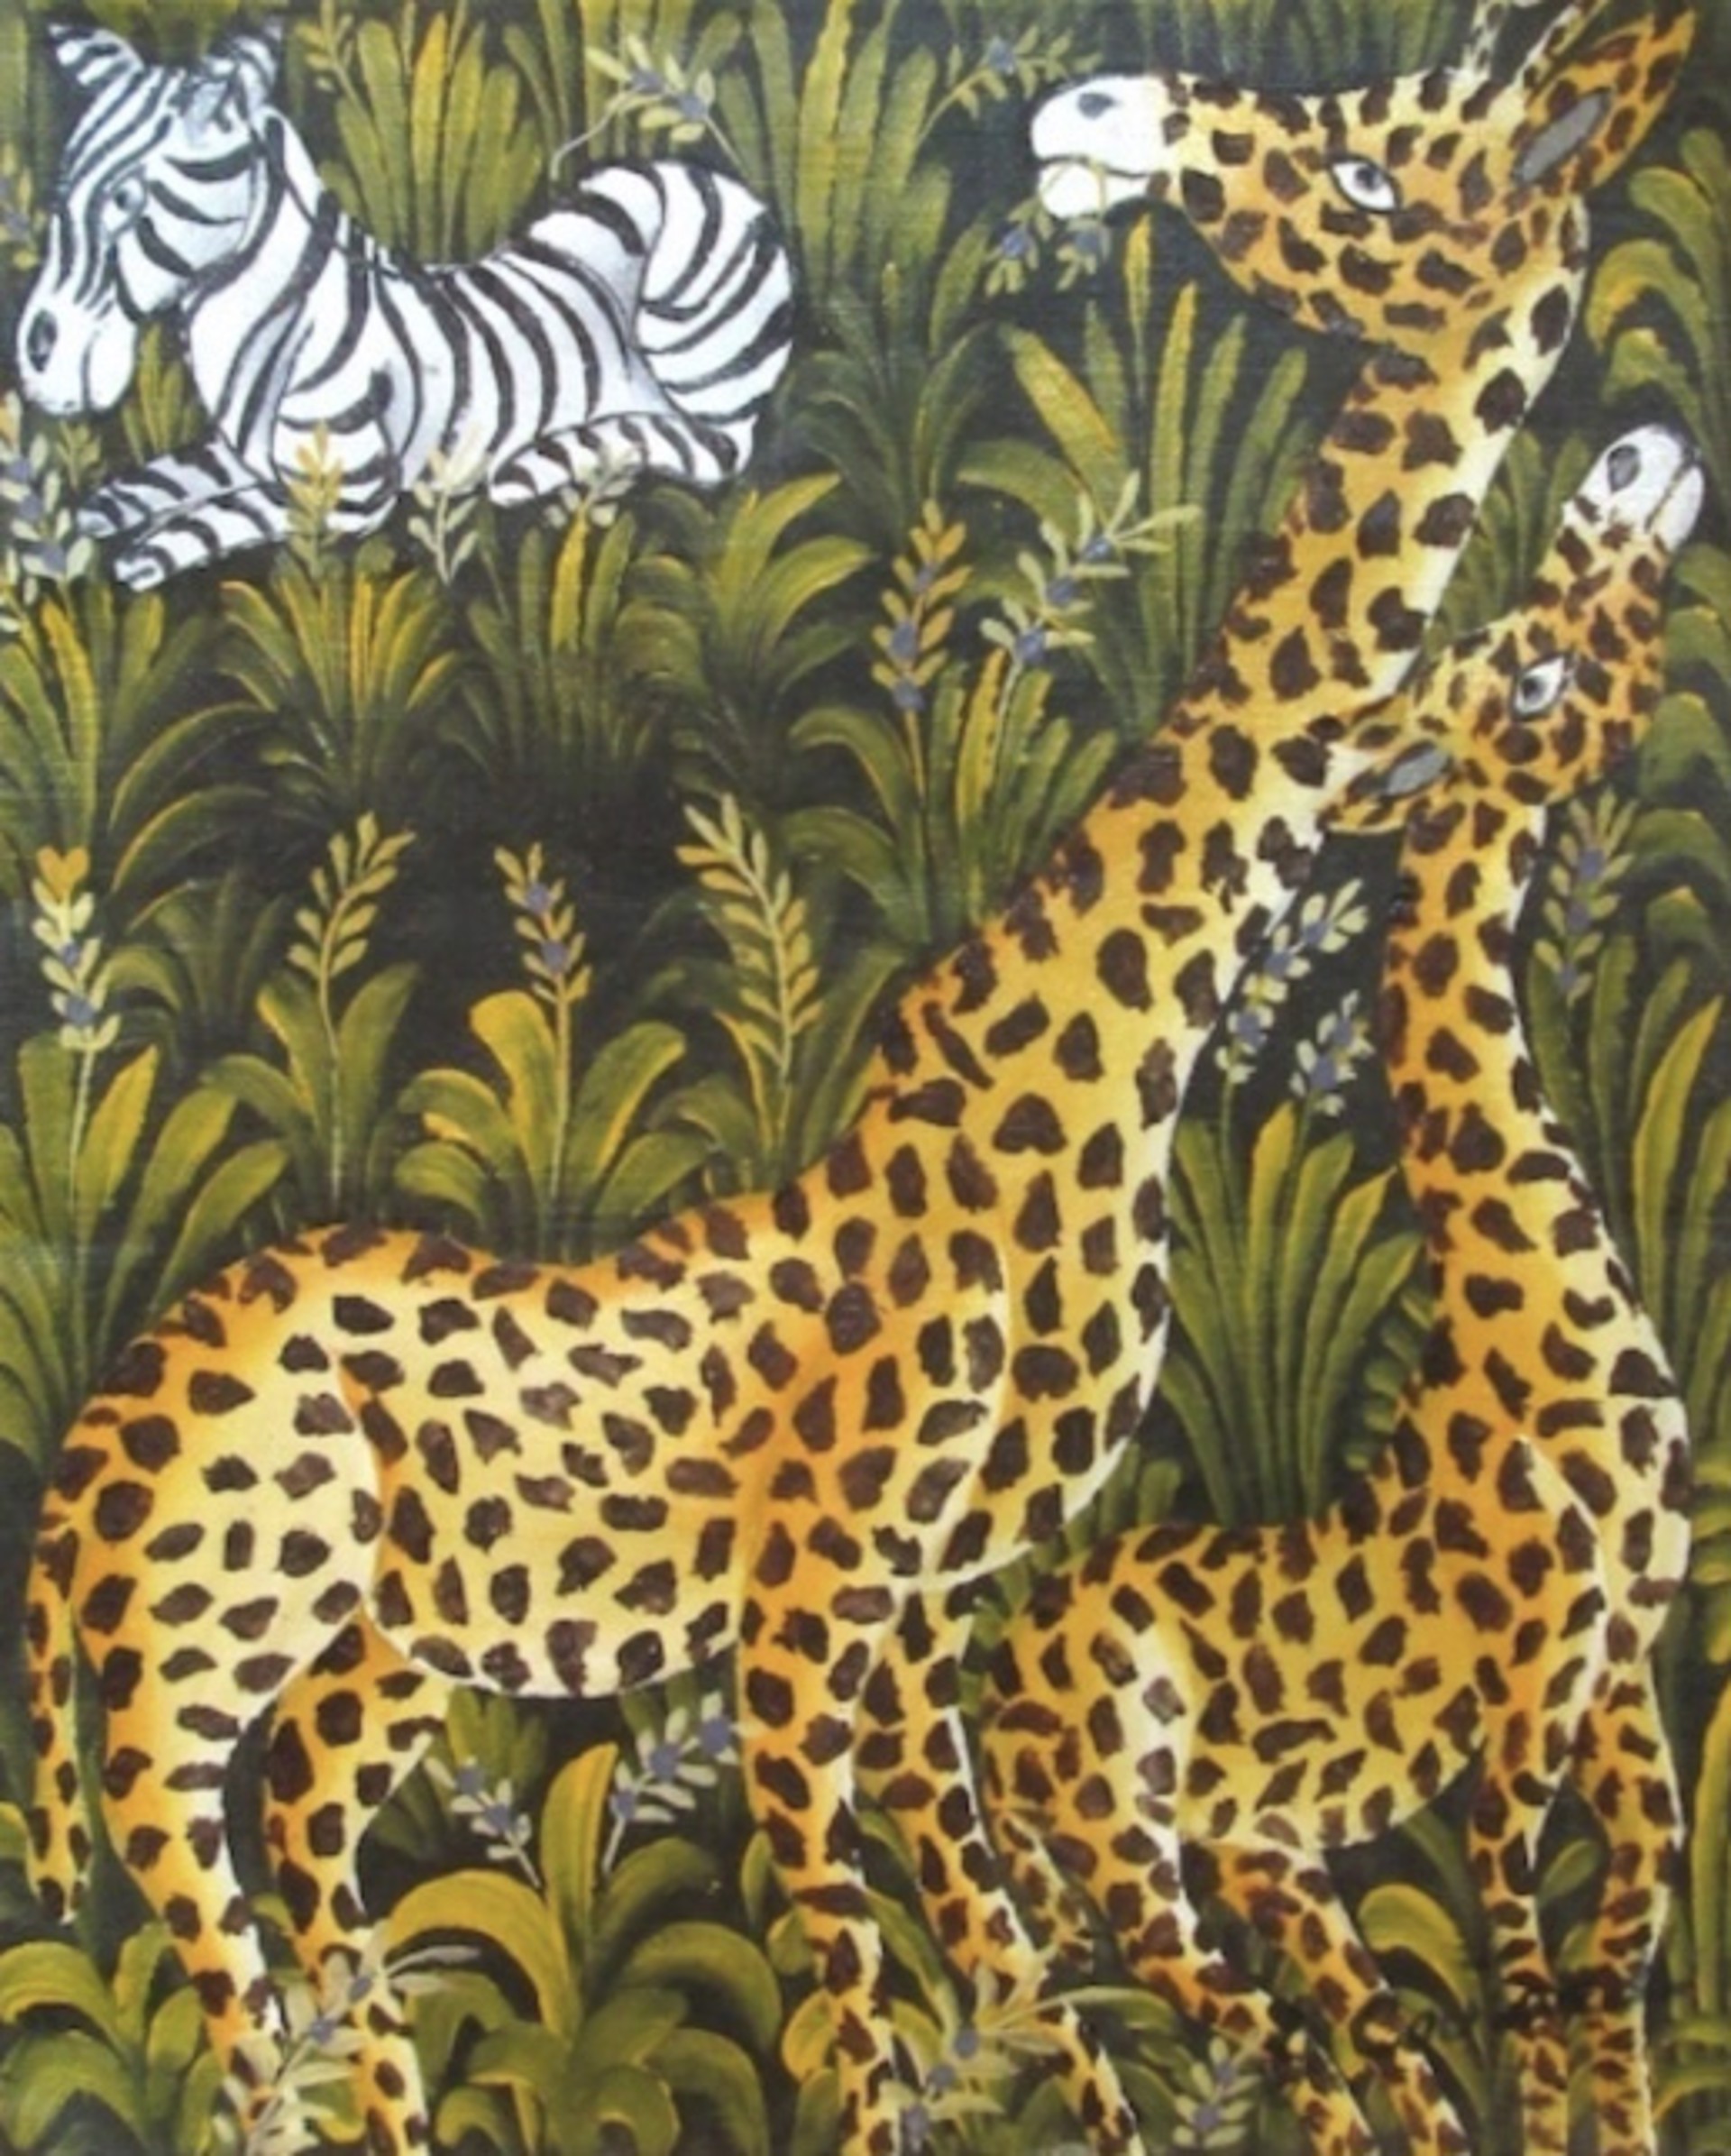 Giraffes & a Zebra#J7 by Gabriel Coutard (Haitian, b. 1965)